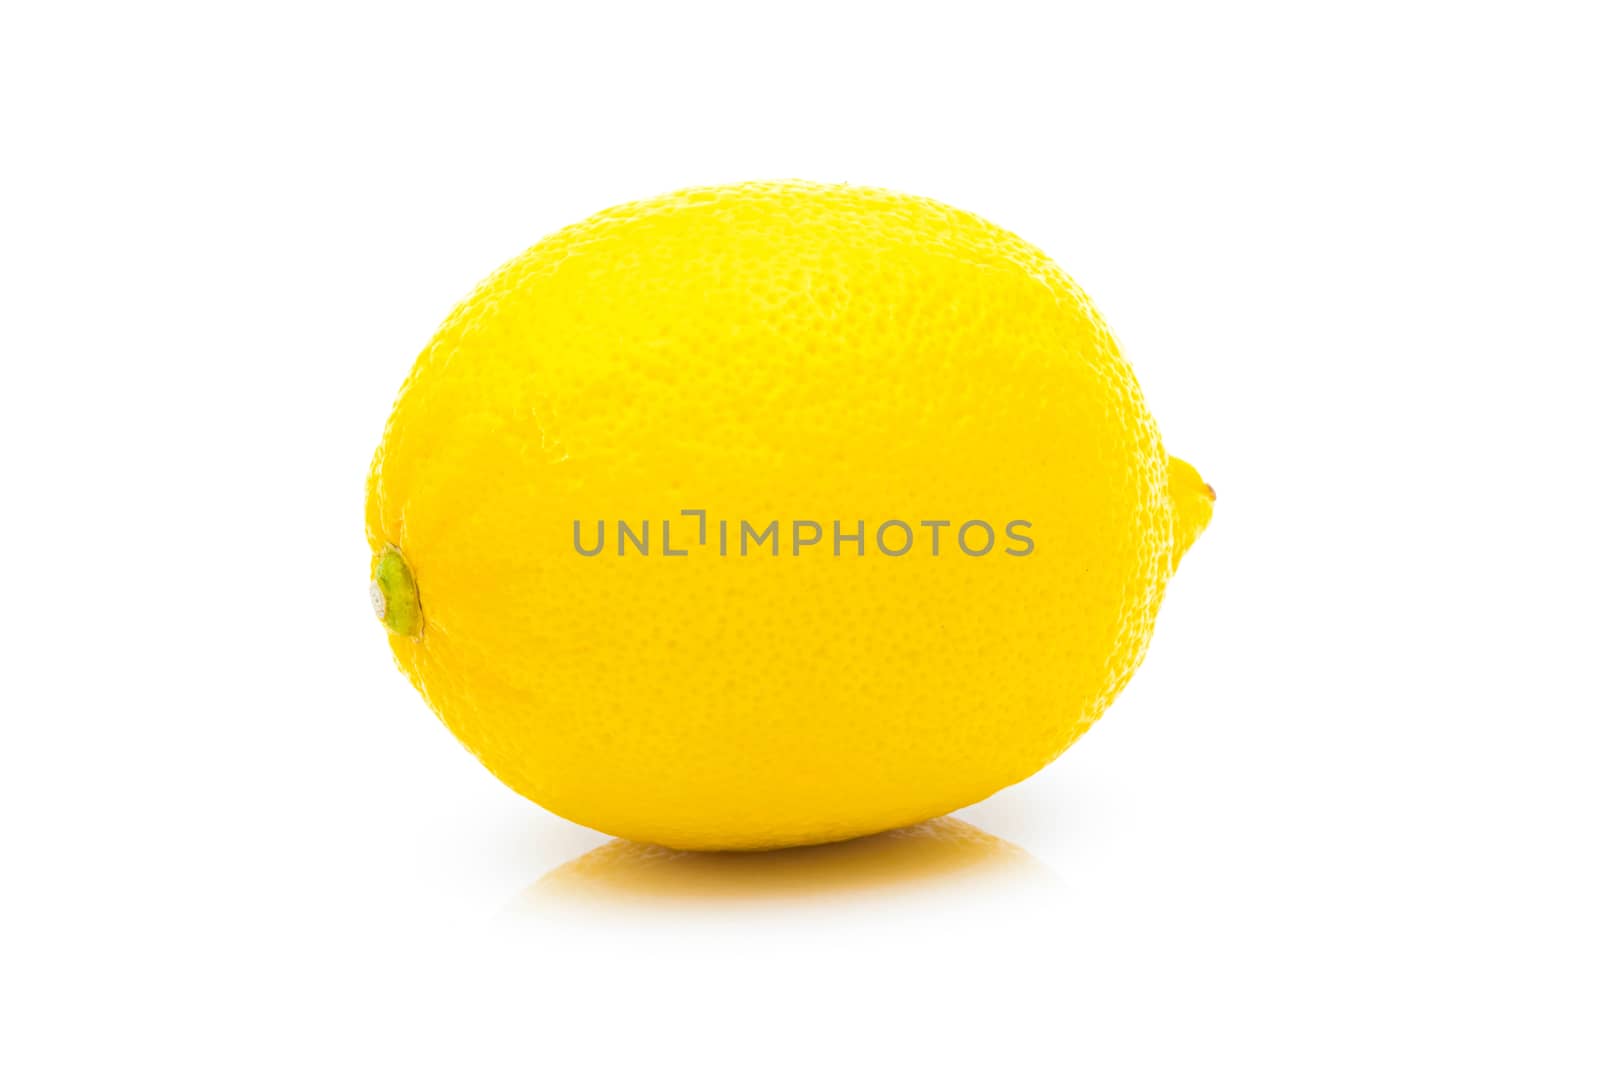 Lemon refreshing on a white background